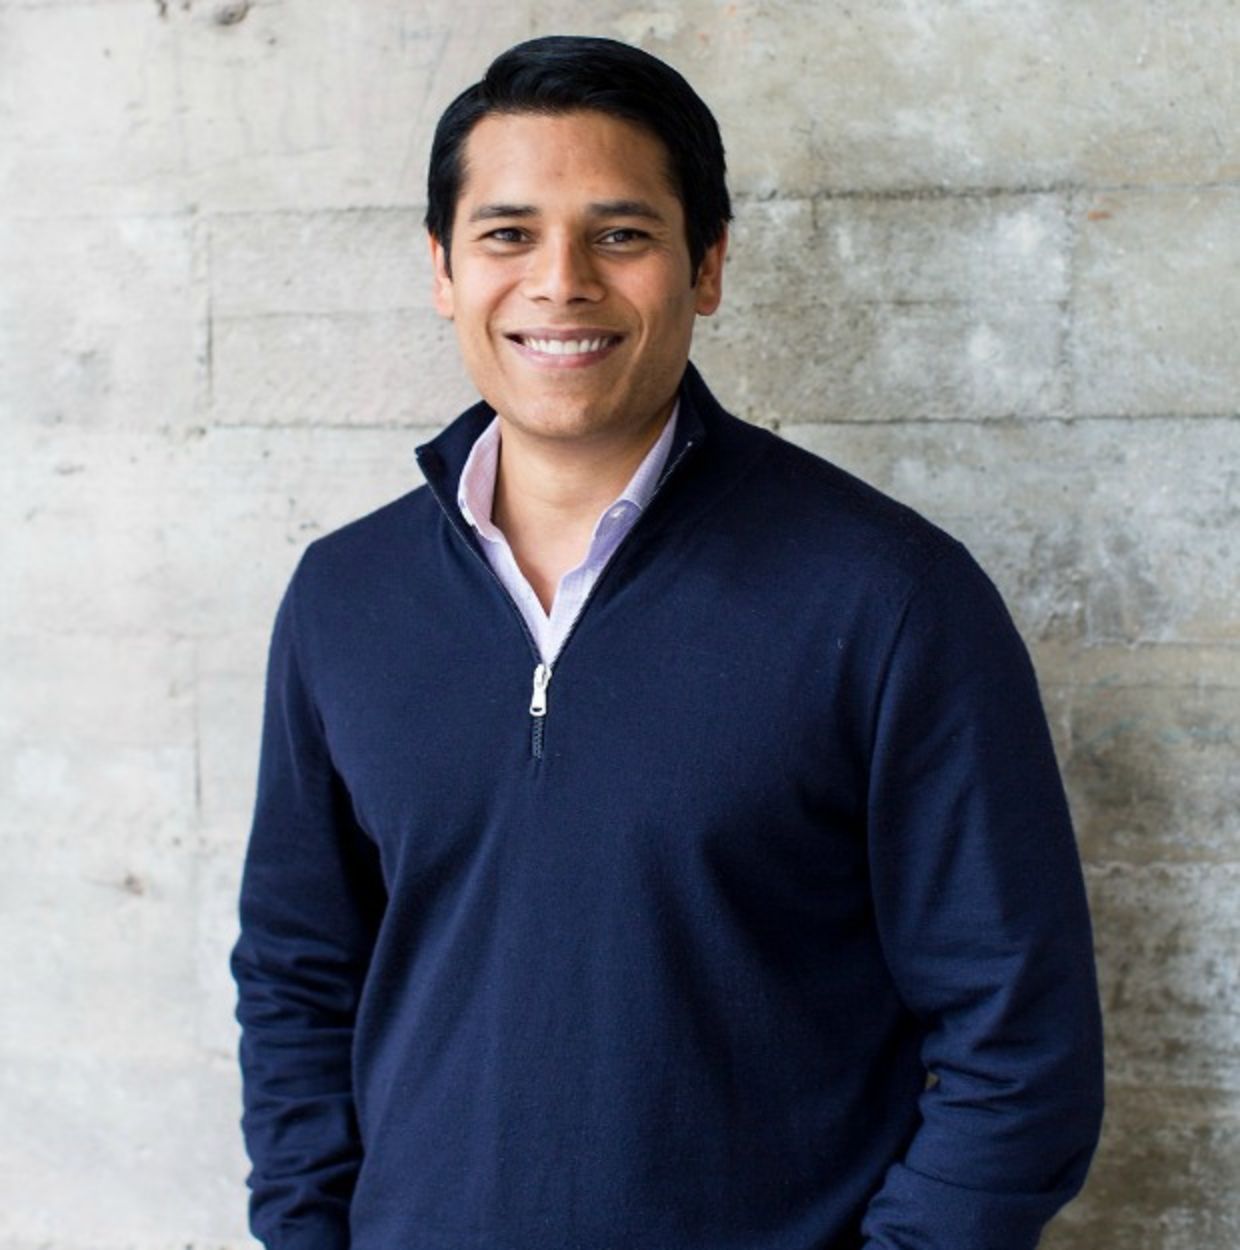 Nirav Tolia is the CEO and Co-Founder of Nextdoor